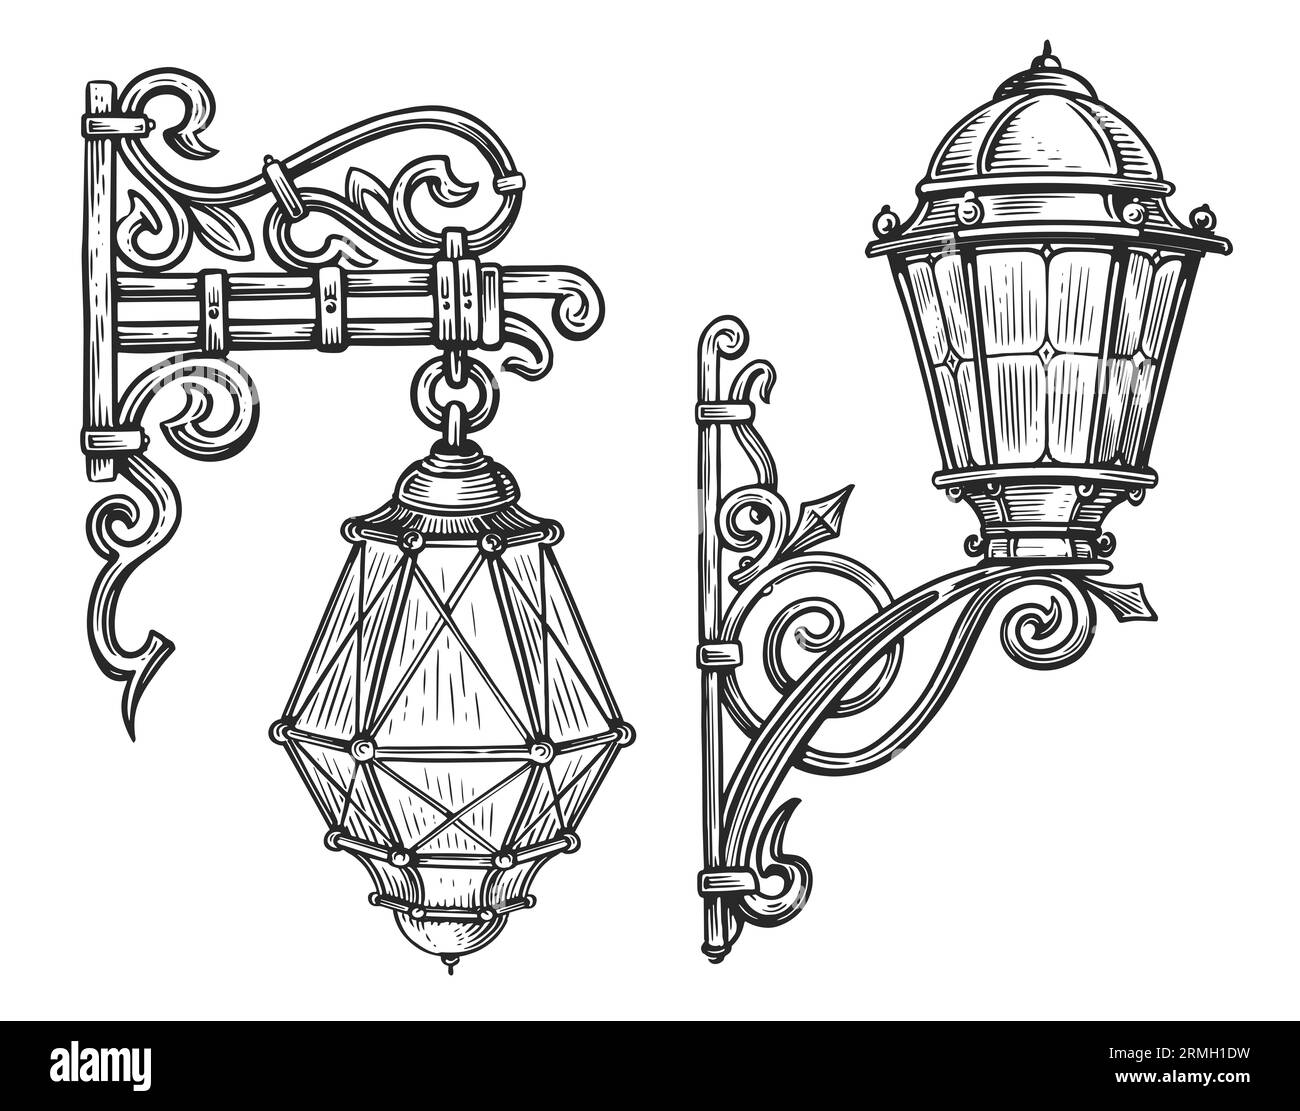 Wall wrought iron street lamp in engraving style. Lantern sketch vintage illustration Stock Photo